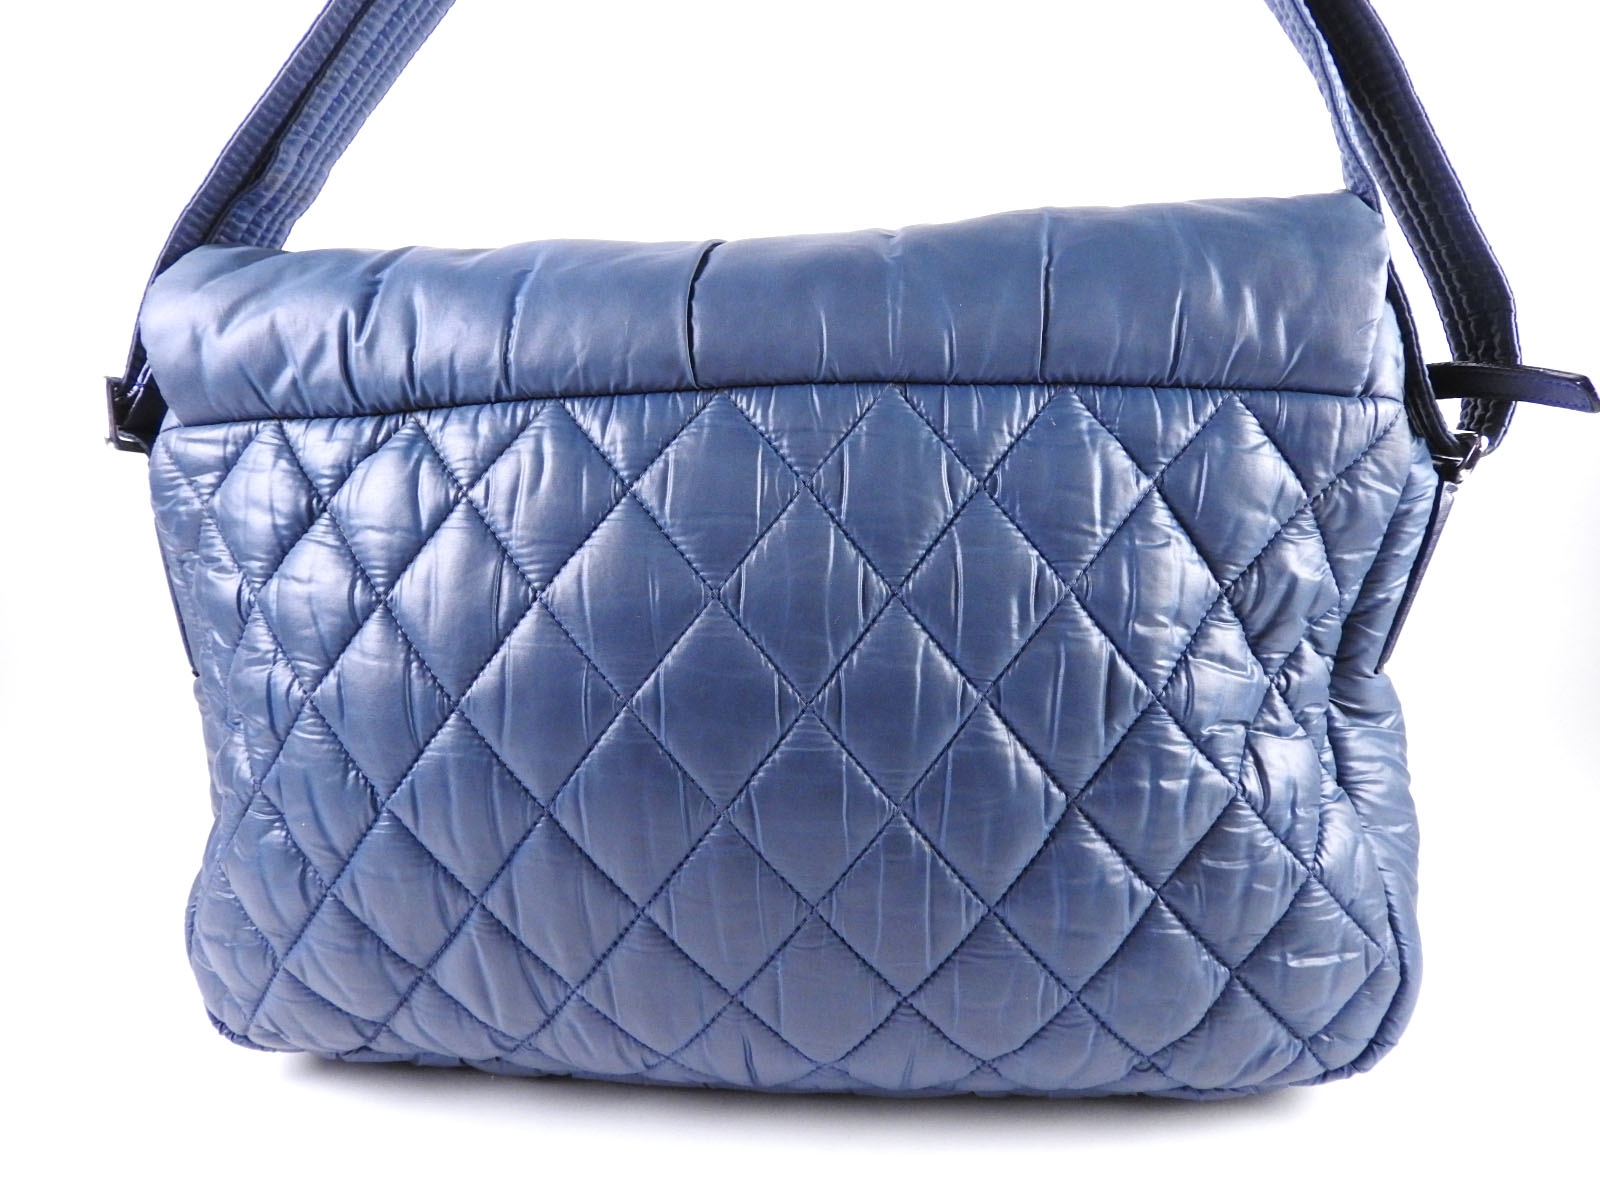 Authentic CHANEL Coco Cocoon Messenger Shoulder Bag Nylon Blue A48617 A-4599 | eBay